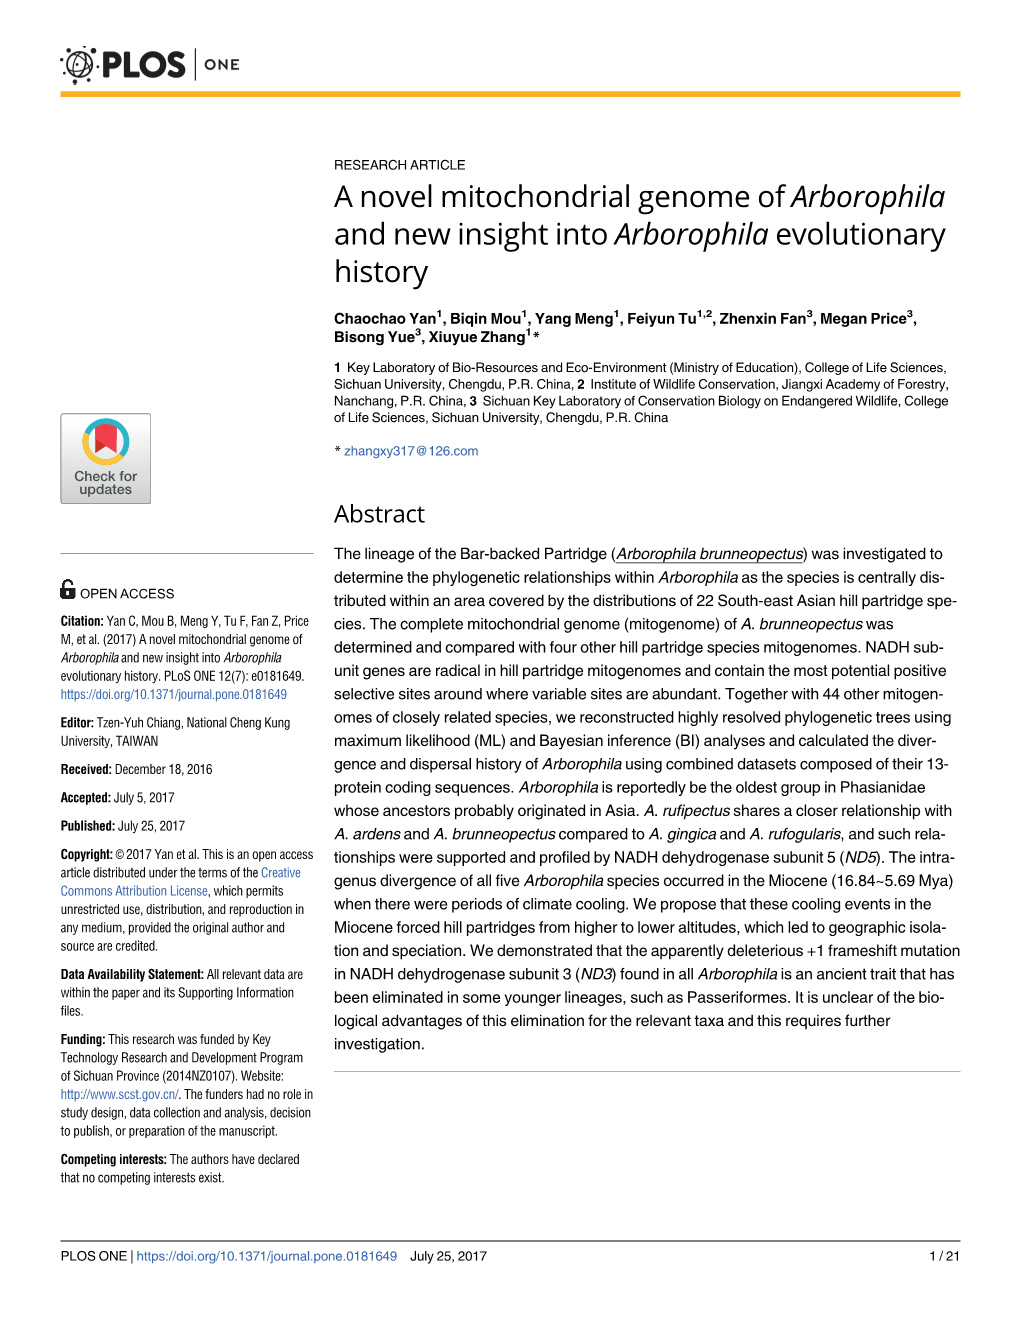 A Novel Mitochondrial Genome of Arborophila and New Insight Into Arborophila Evolutionary History